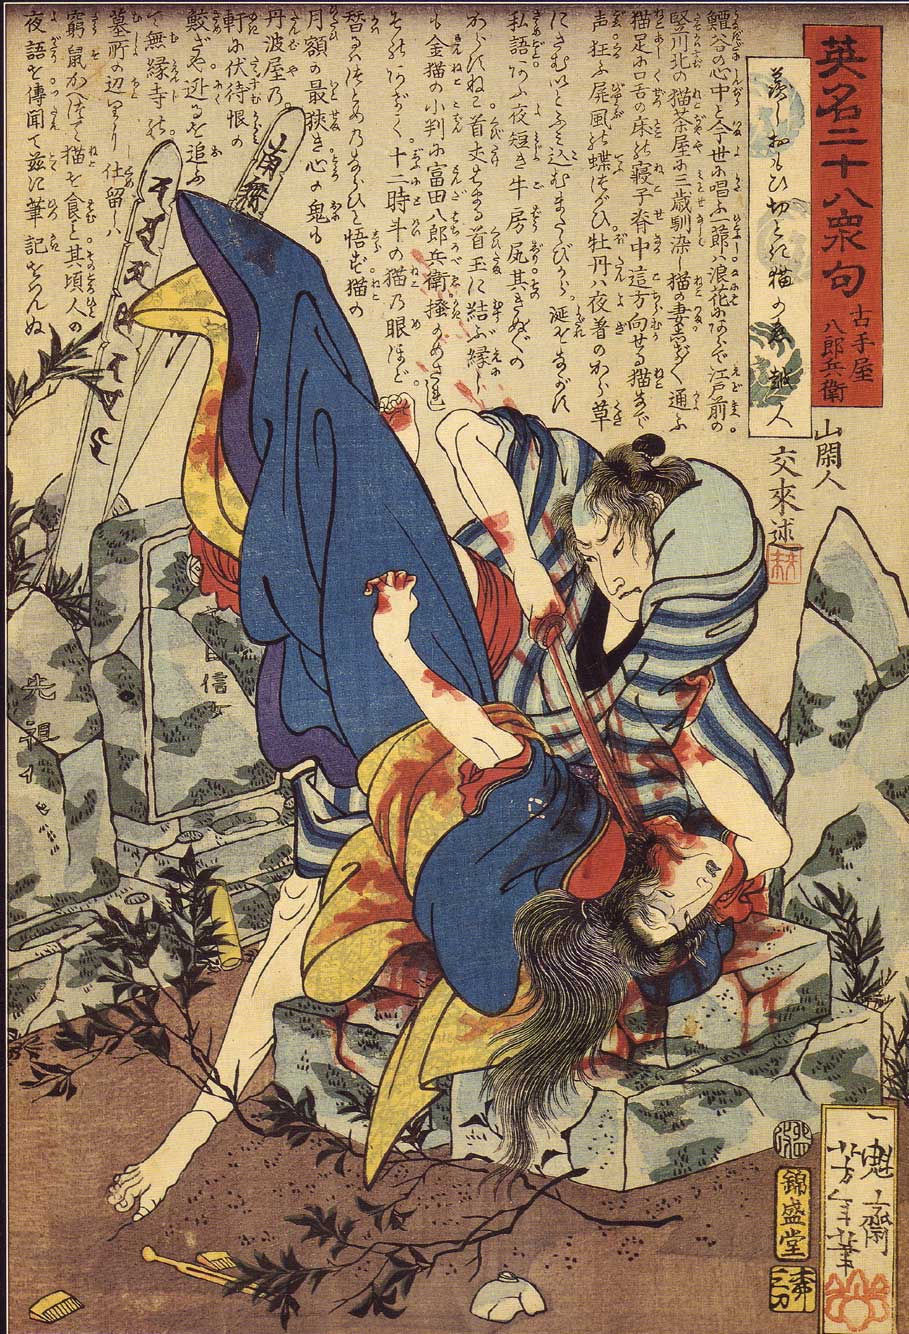 Tsukioka Yoshitoshi, Furuteya Hachirōbei murdering a woman in a graveyard, 9